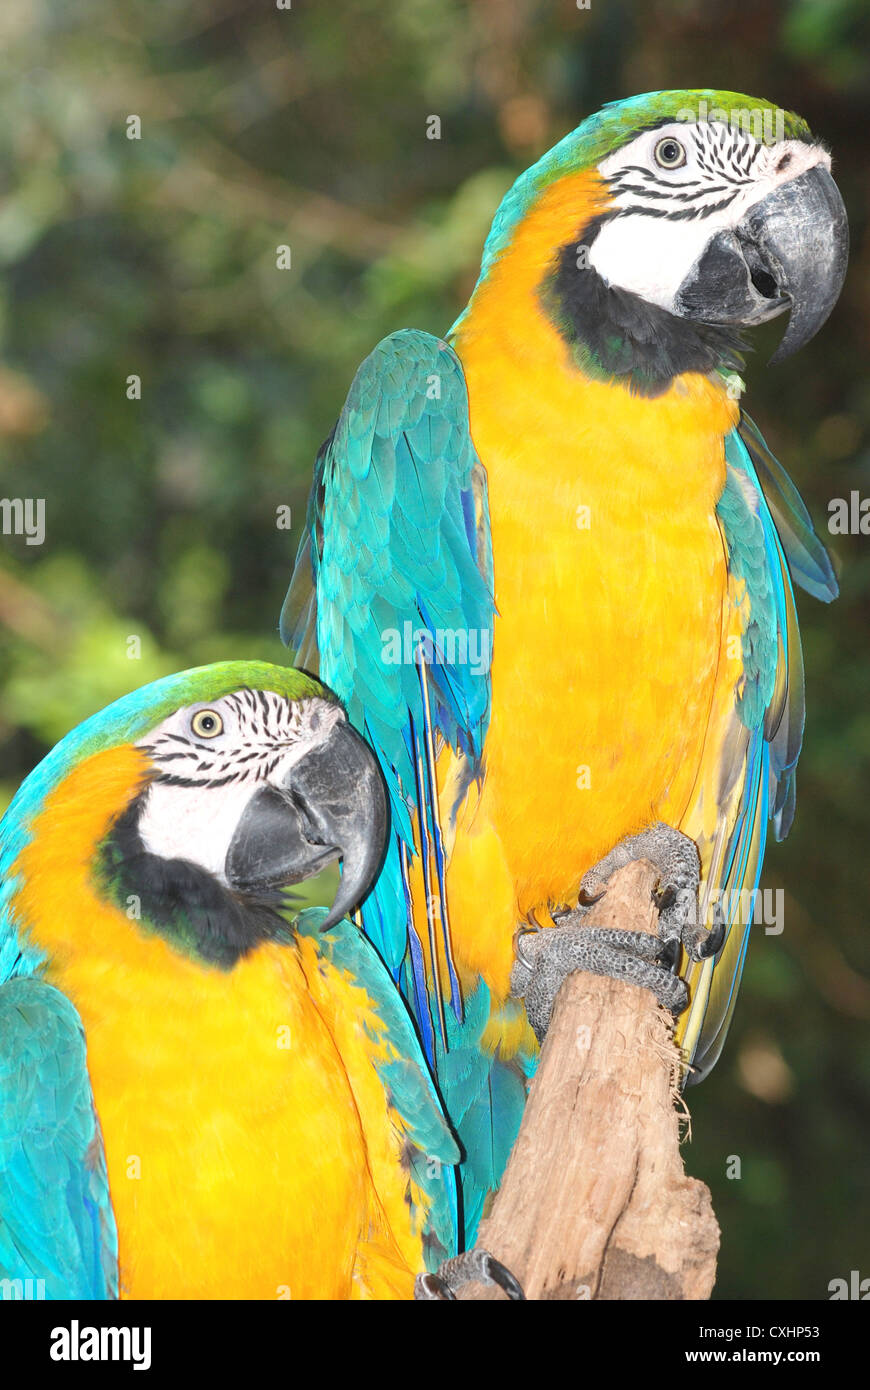 Ritratto macaw bird close up Foto Stock